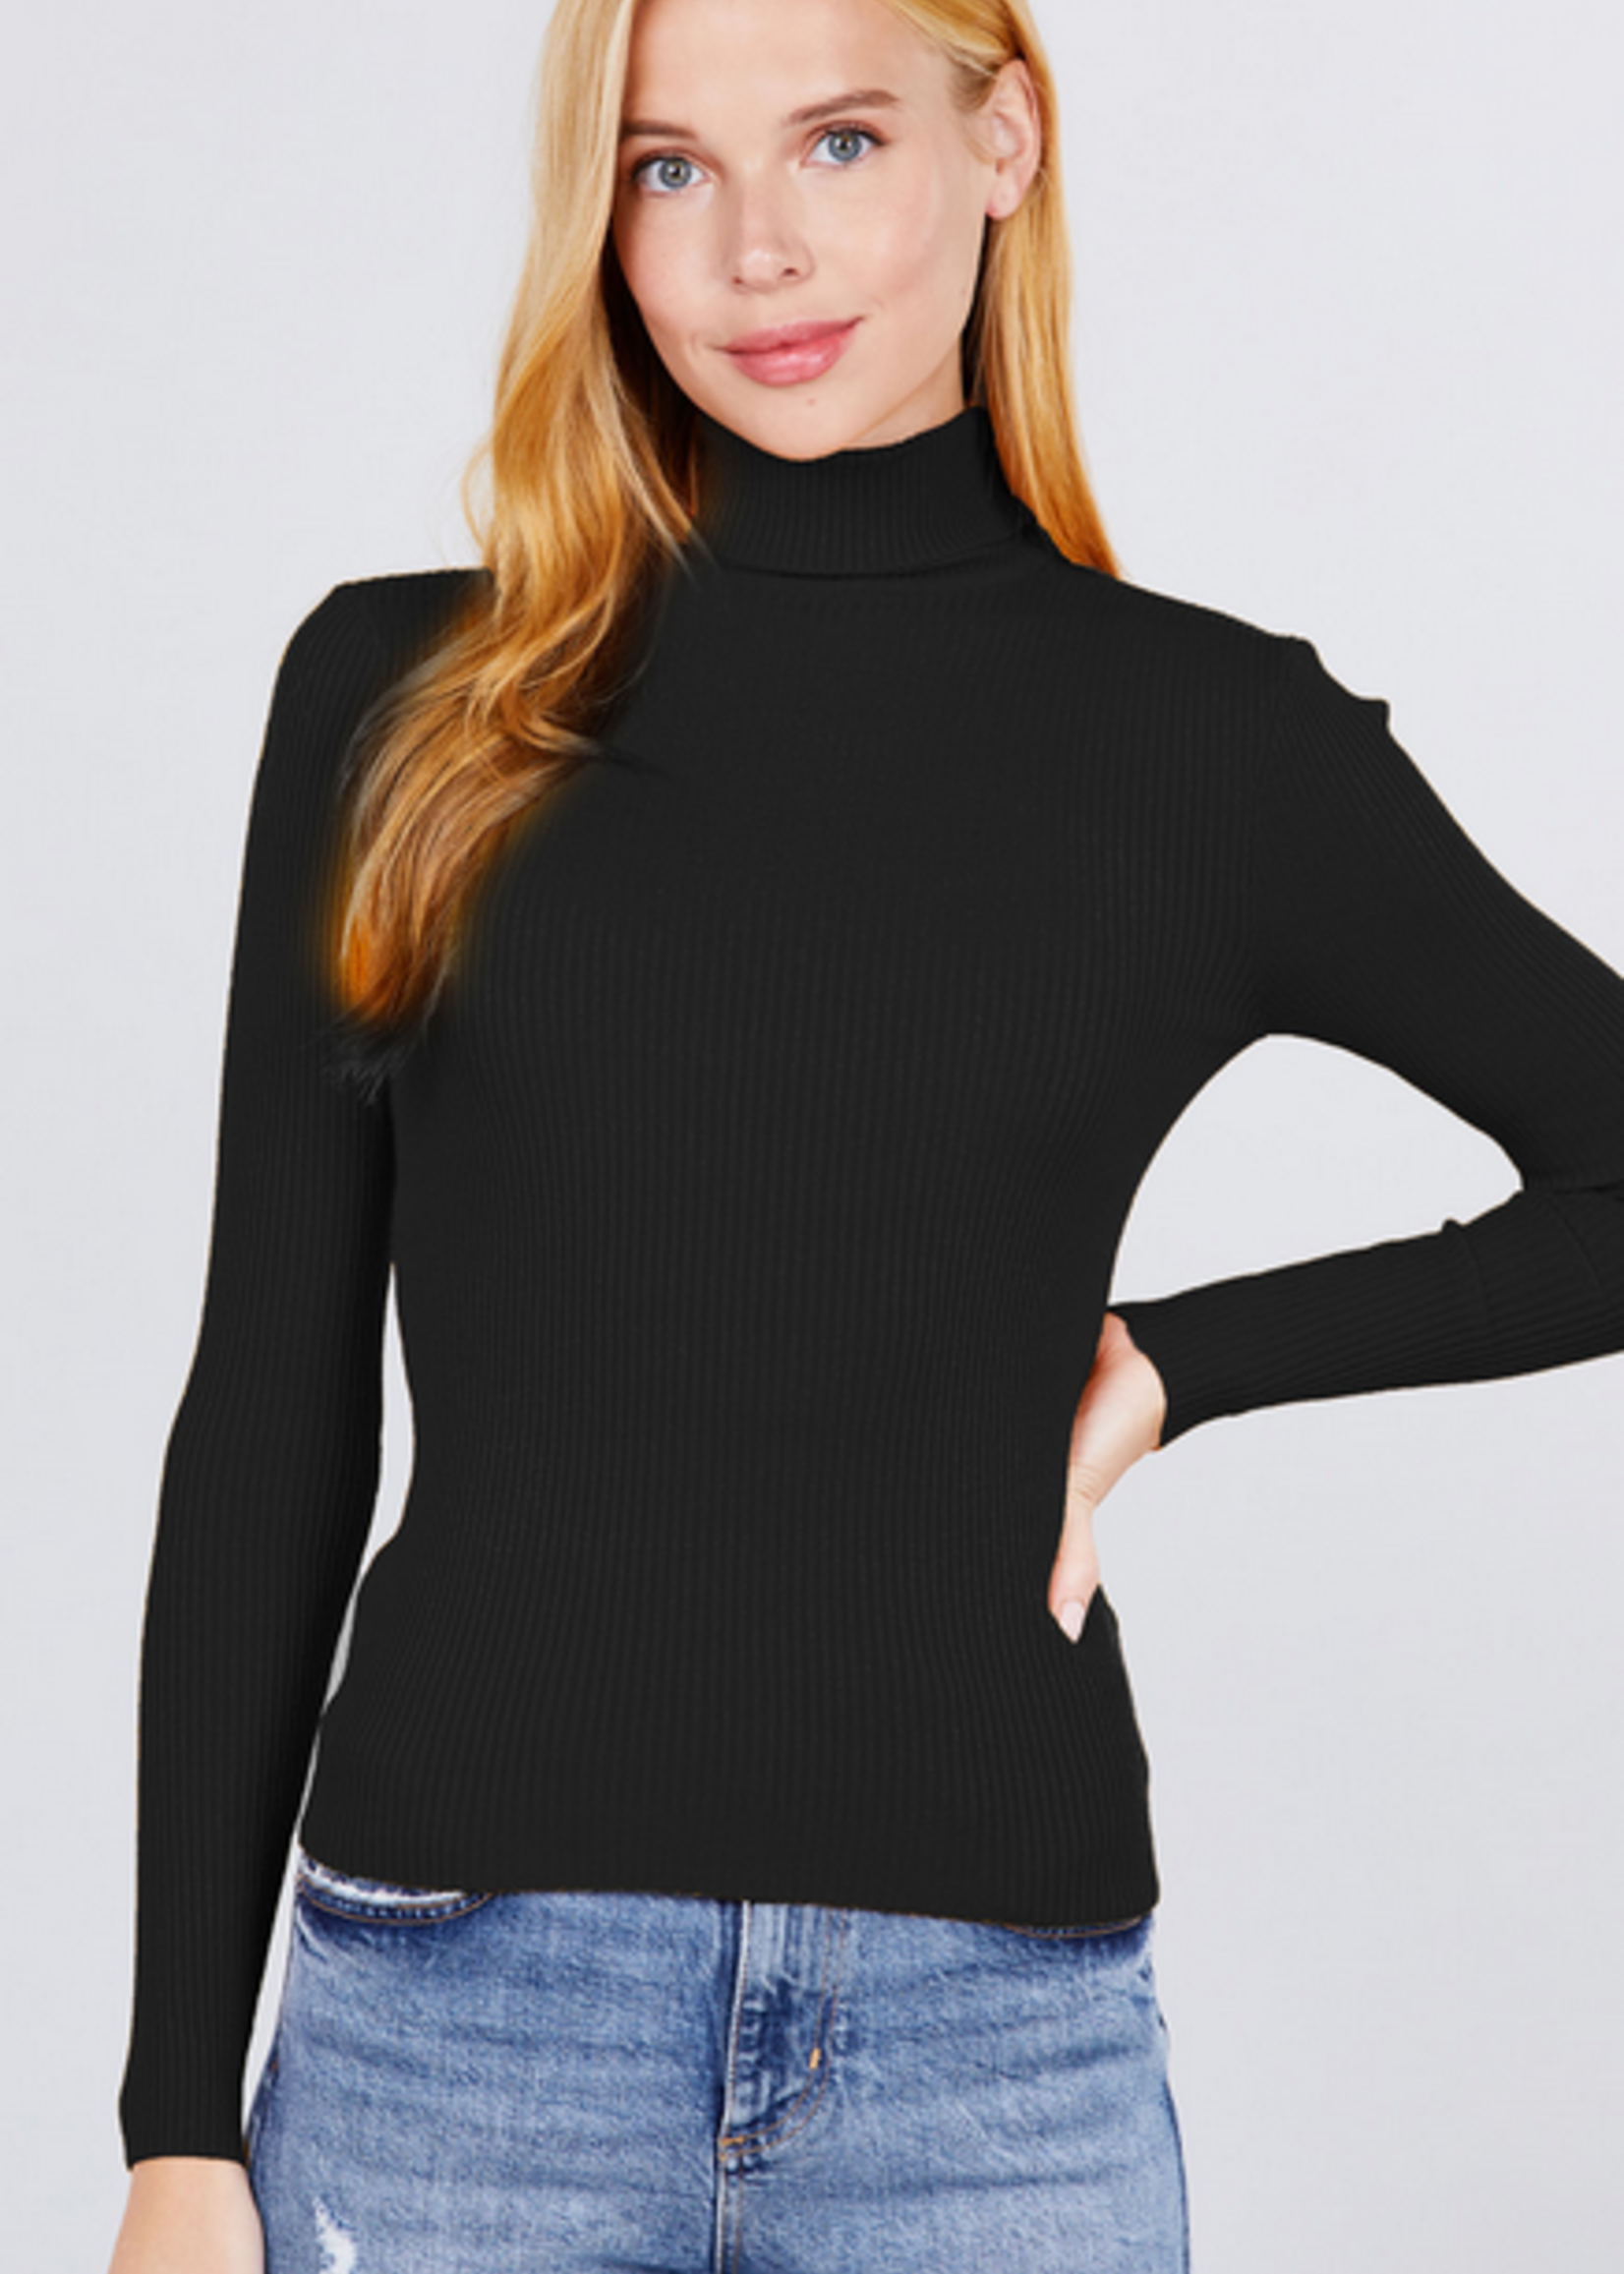 Women's Shrunken Rib Turtleneck Pullover Sweater - Universal Thread™ Black  XS